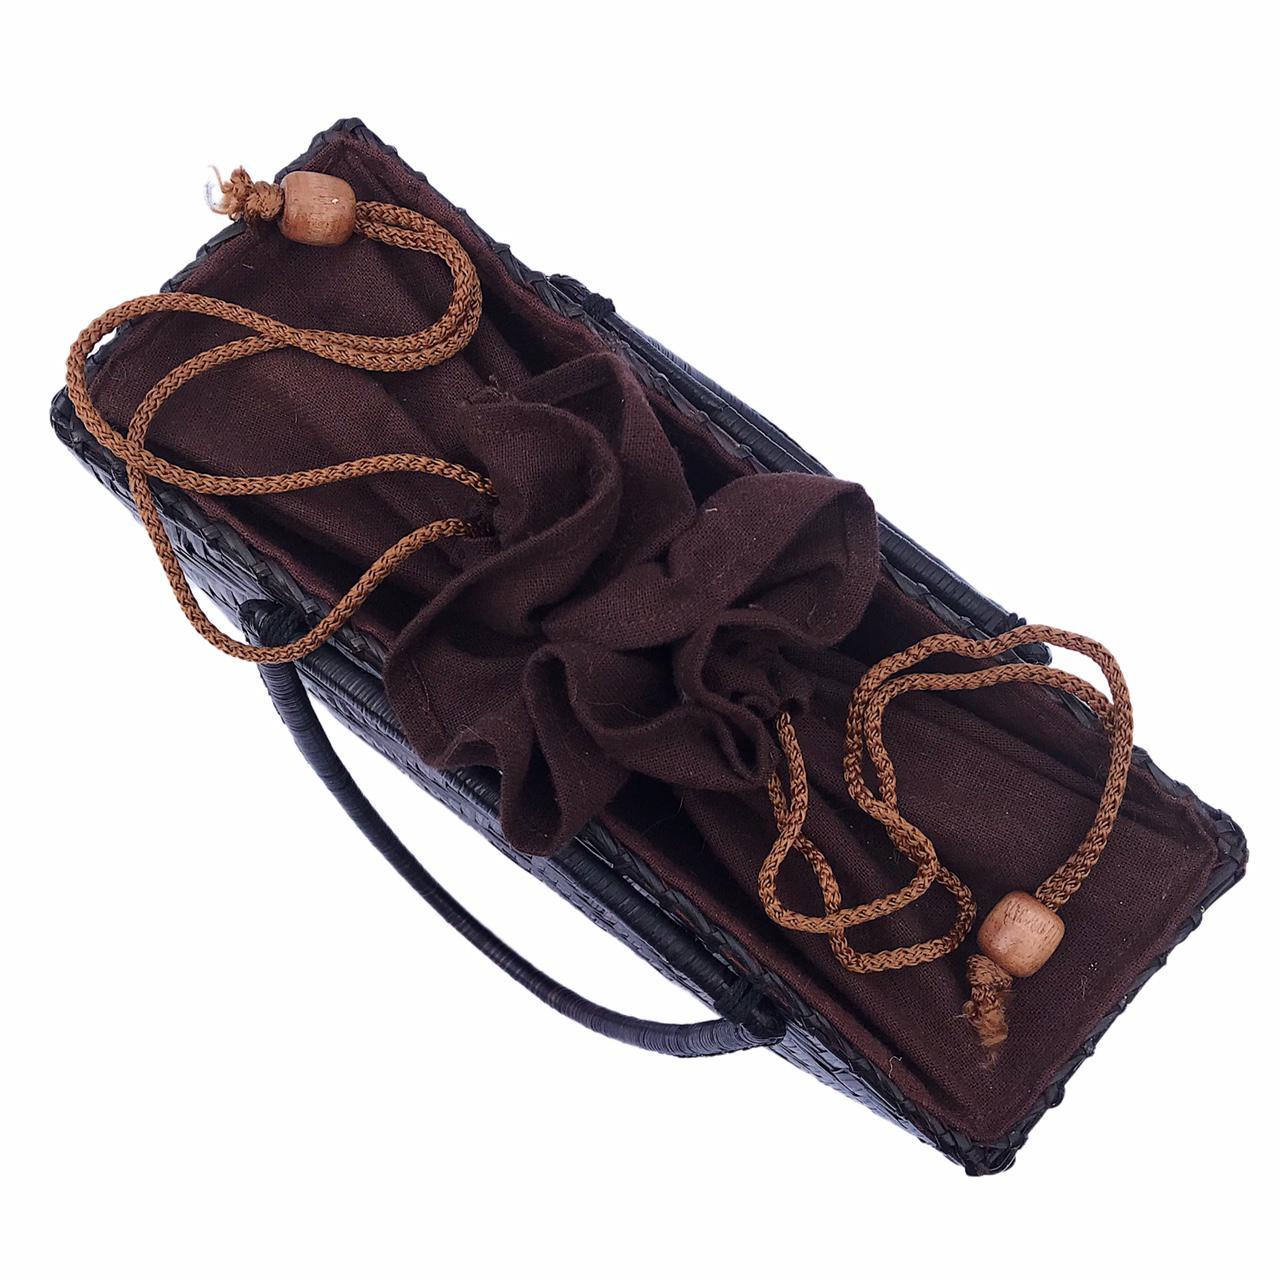 Product Image 2 - Dark brown woven wooden wicker